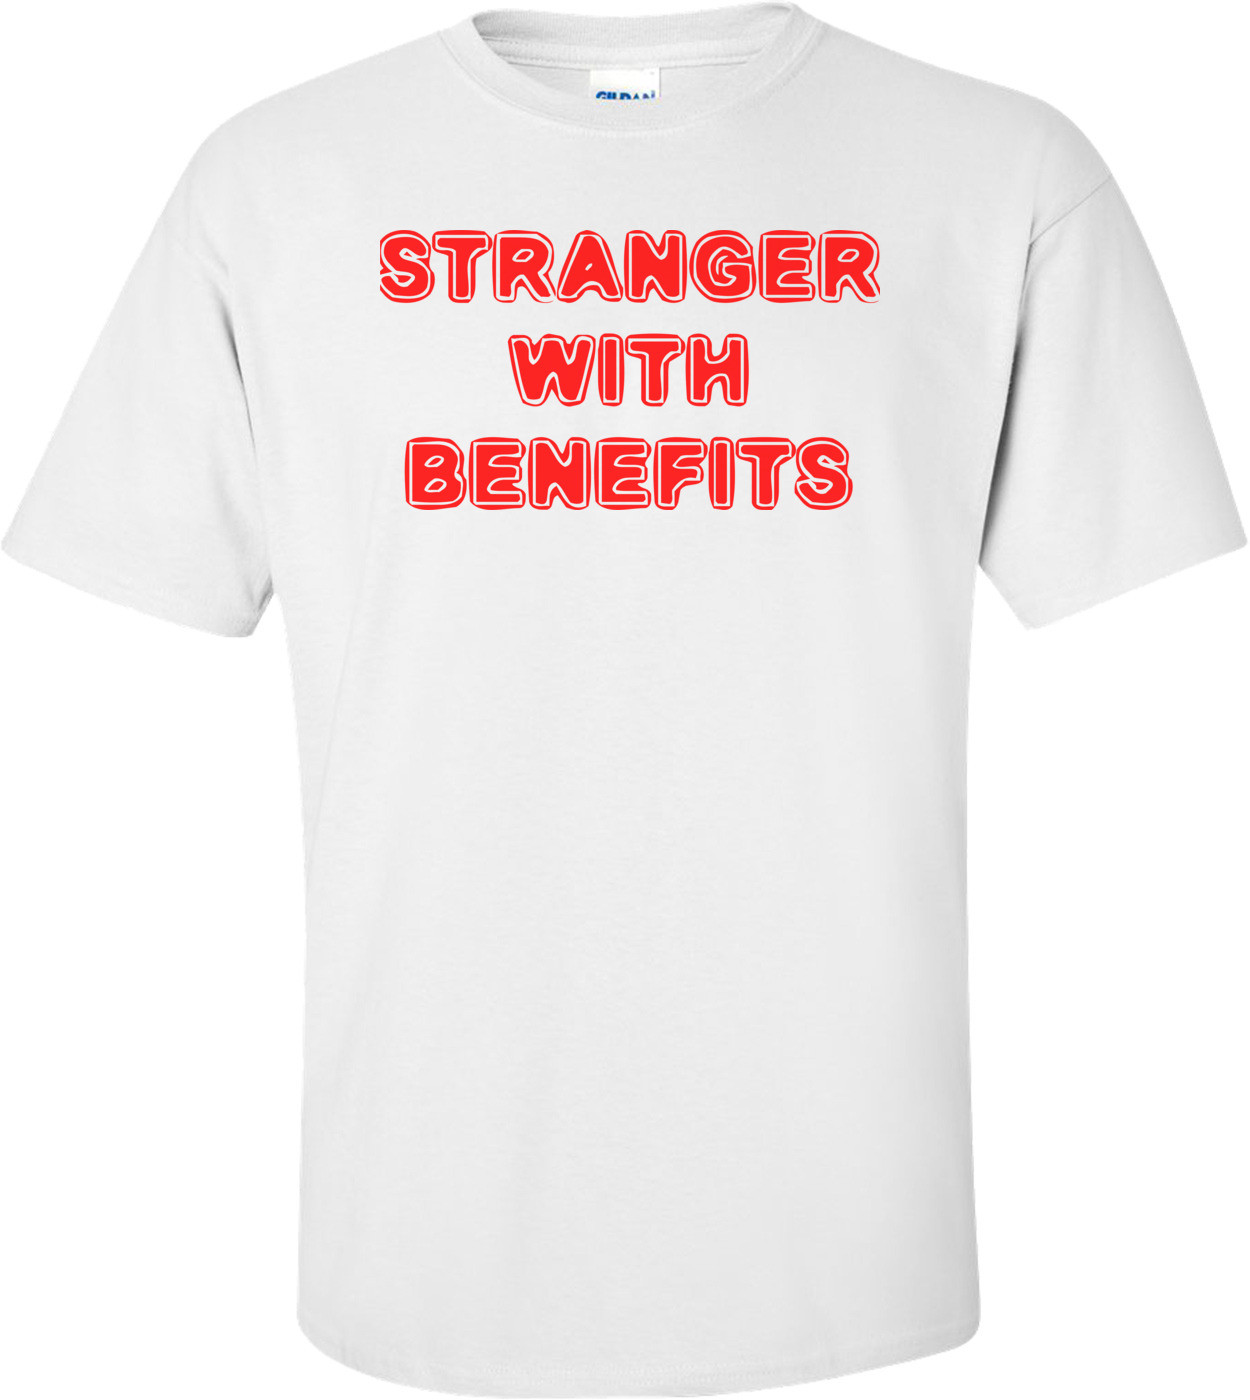 STRANGER WITH BENEFITS Shirt